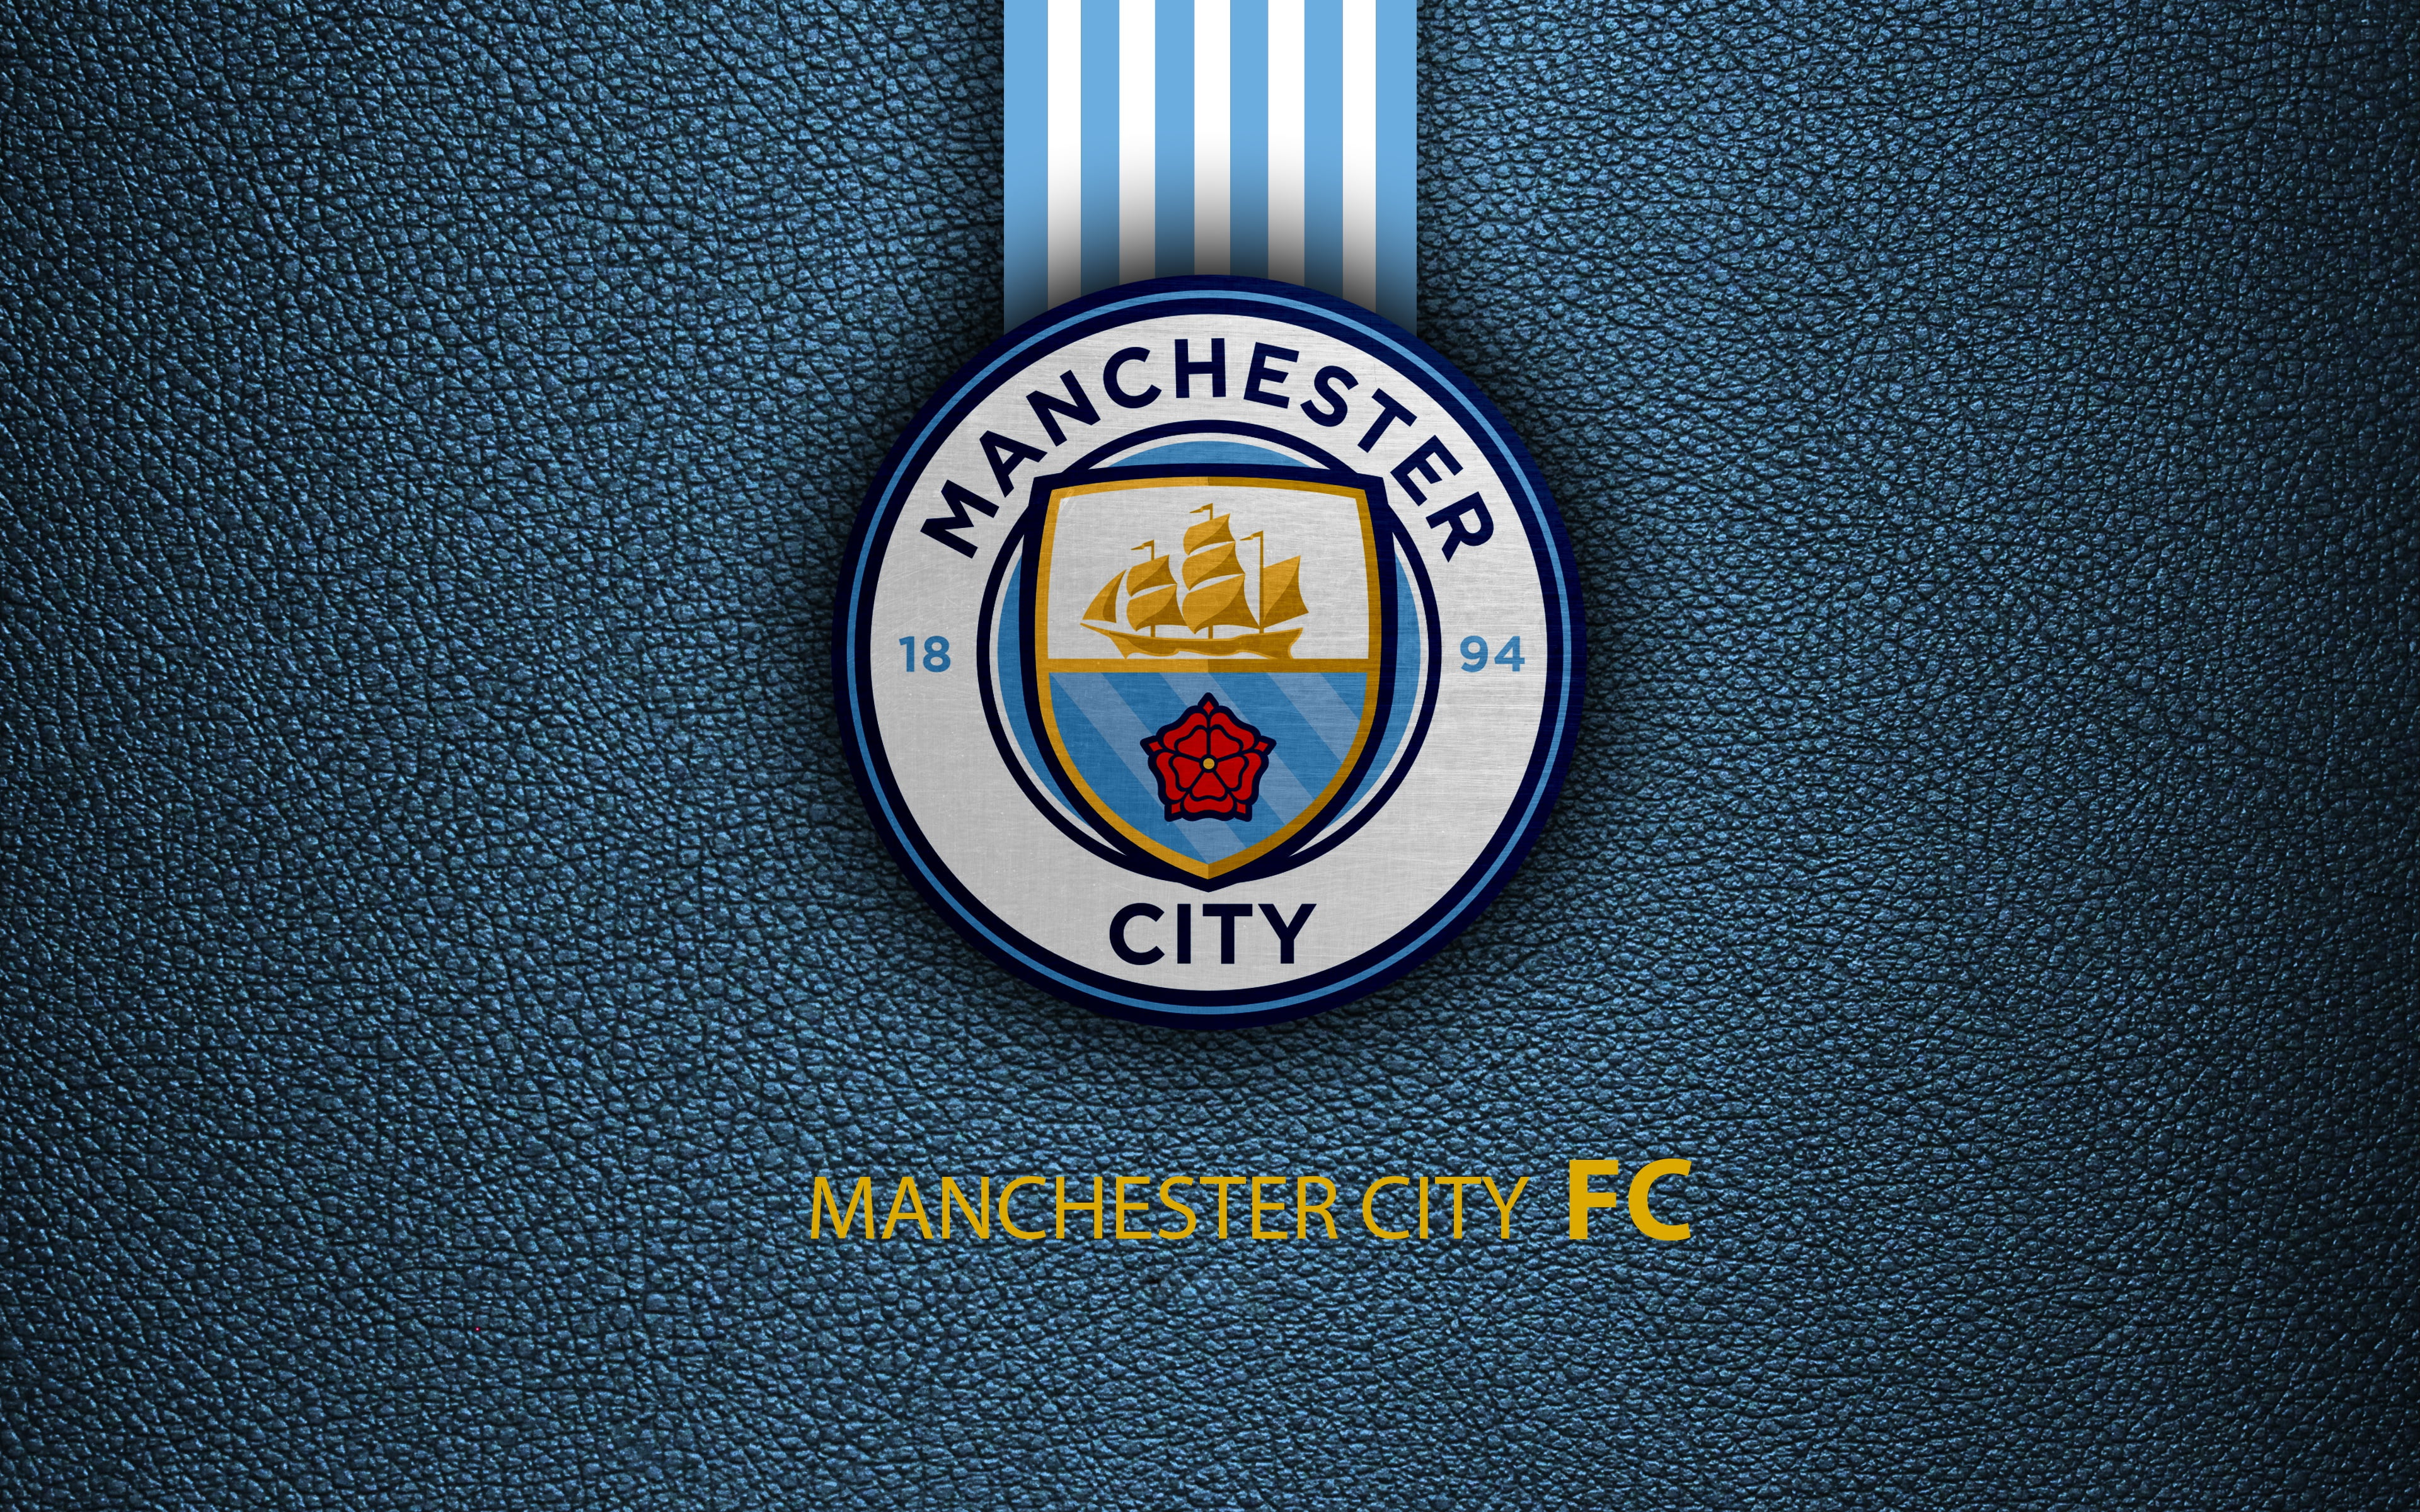 Logo, Football, Soccer, Manchester City, Emblem, English Club